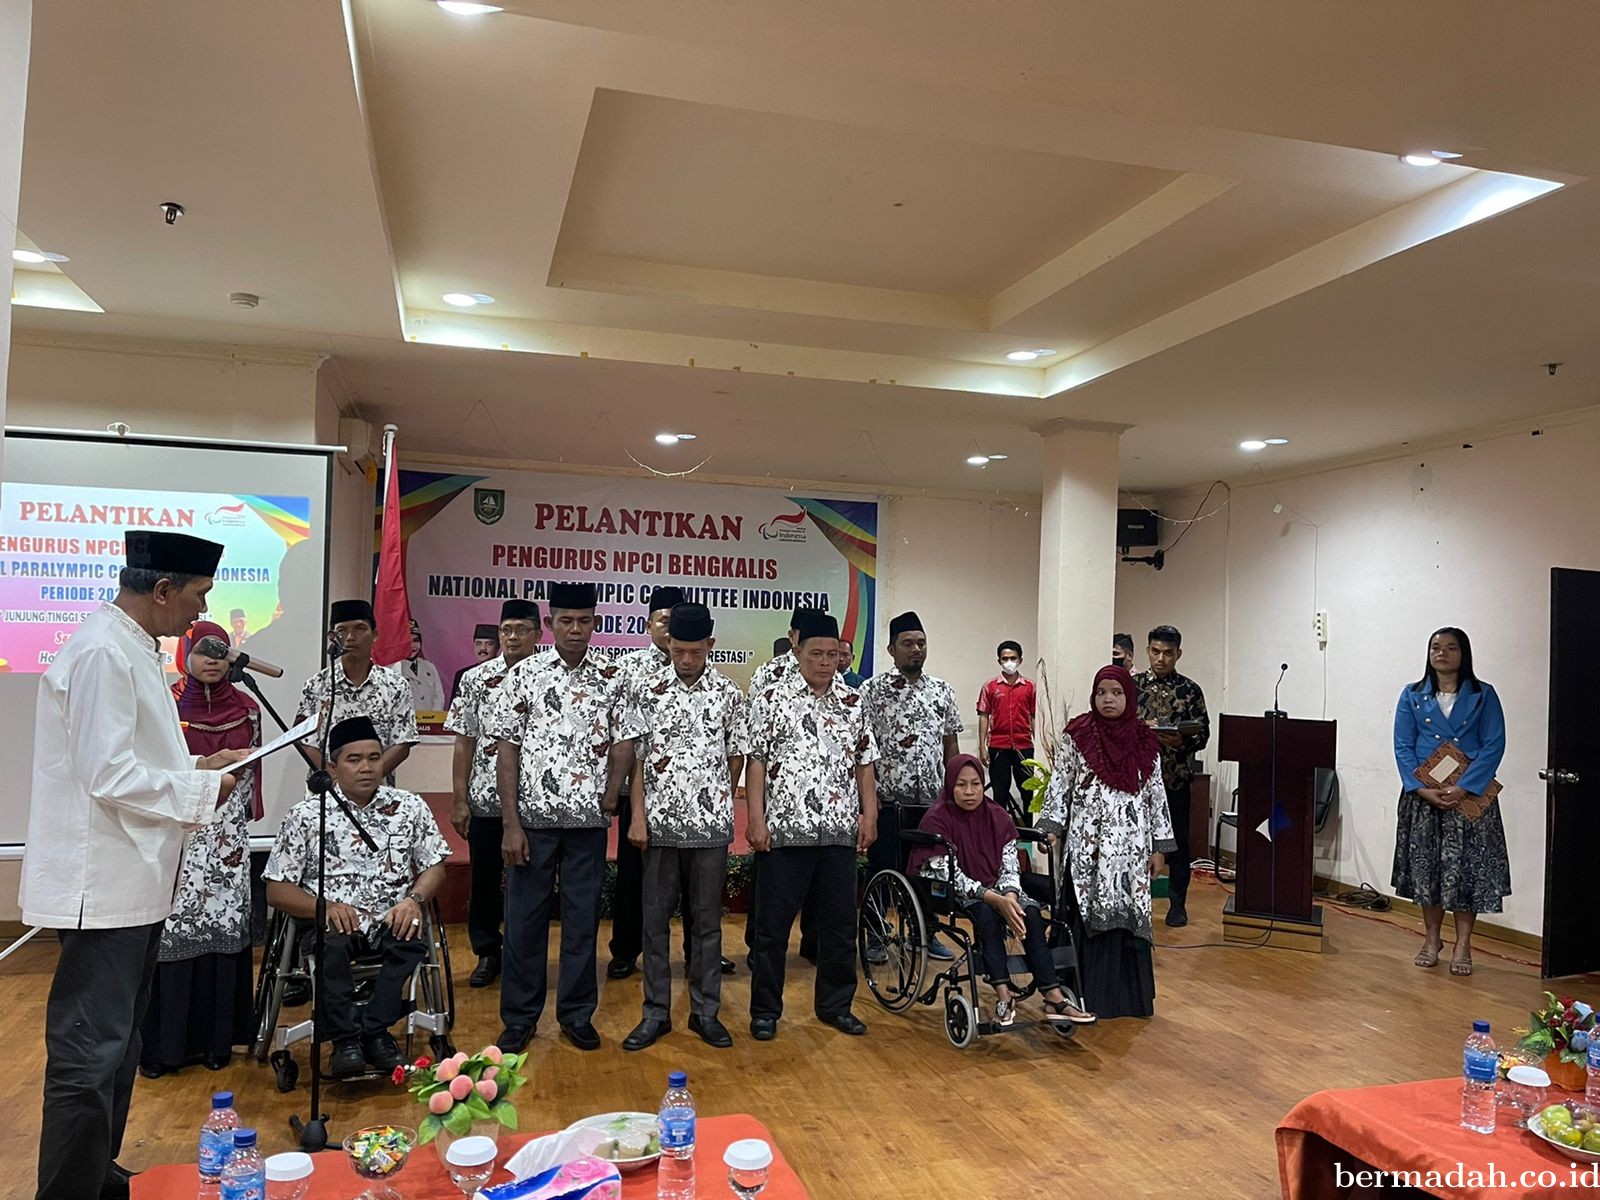 Ketua NPC Riau Lantik Pengurus National Paralympic Committe Indonesia Bengkalis